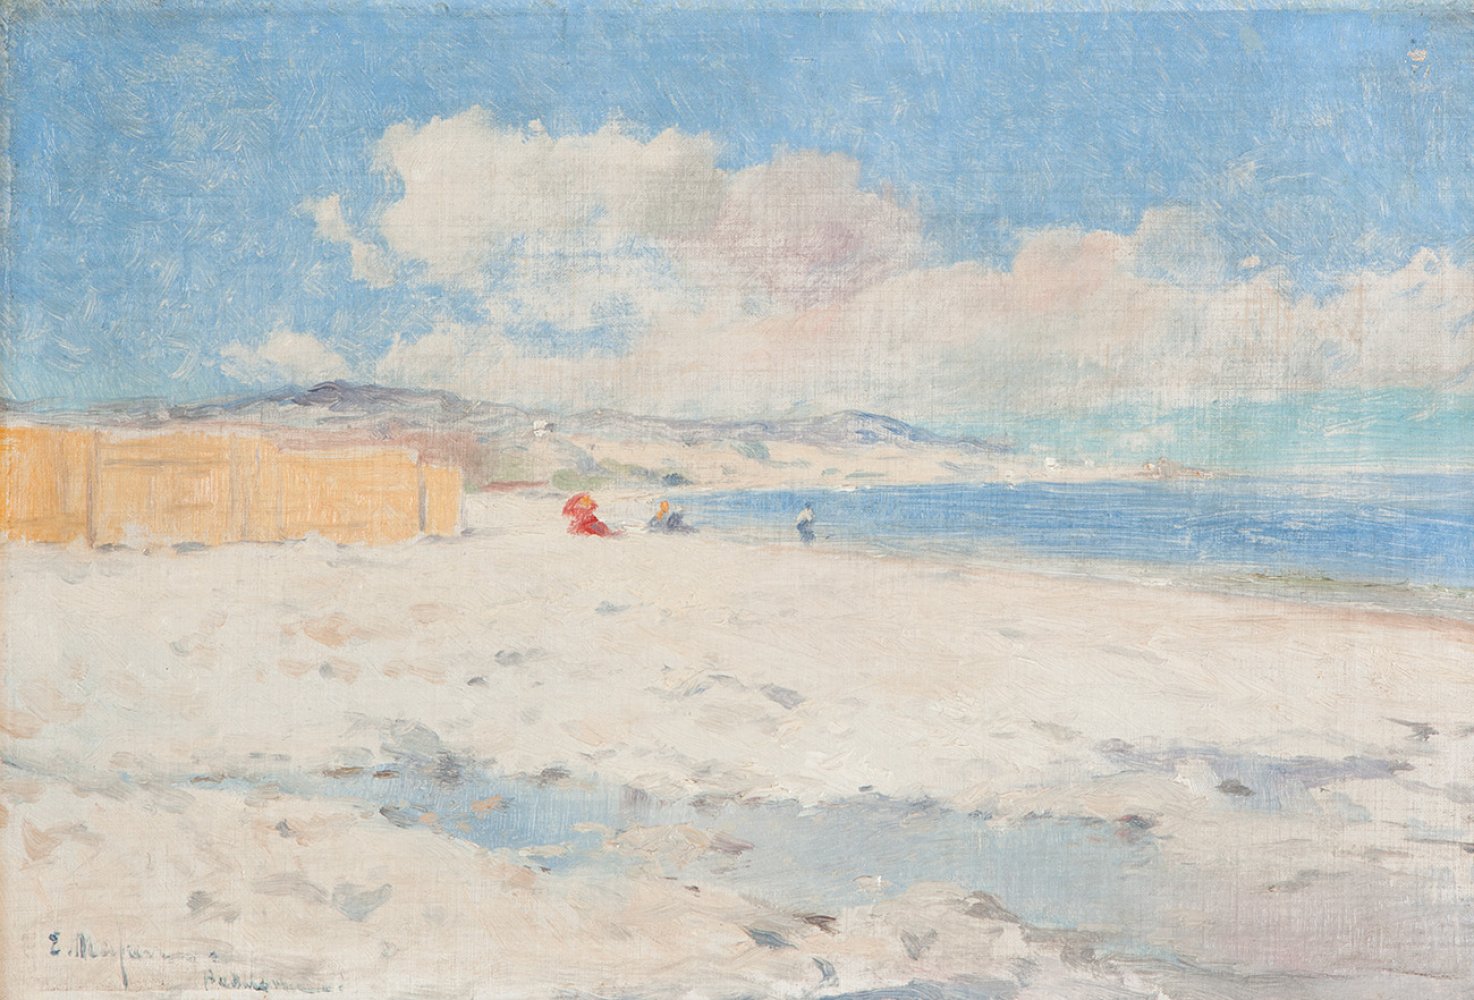 ELISEO MEIFRÈN ROIG (Barcelona, 1859 - 1940)."Marina".Oil on canvas.Signed in the lower left